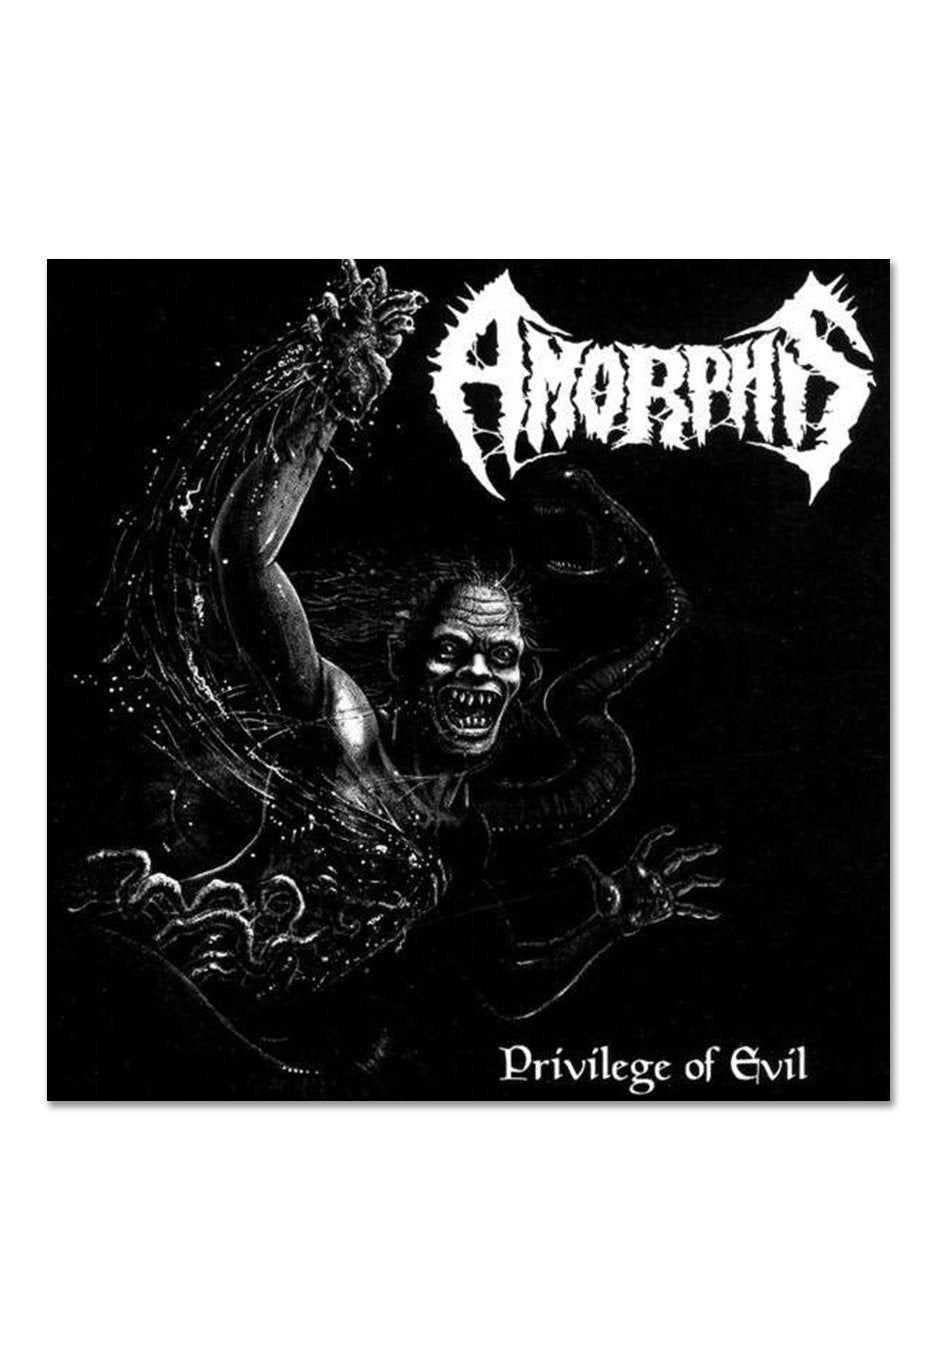 Amorphis - Privilege Of Evil Ltd. Black & White Galaxy - Colored Vinyl